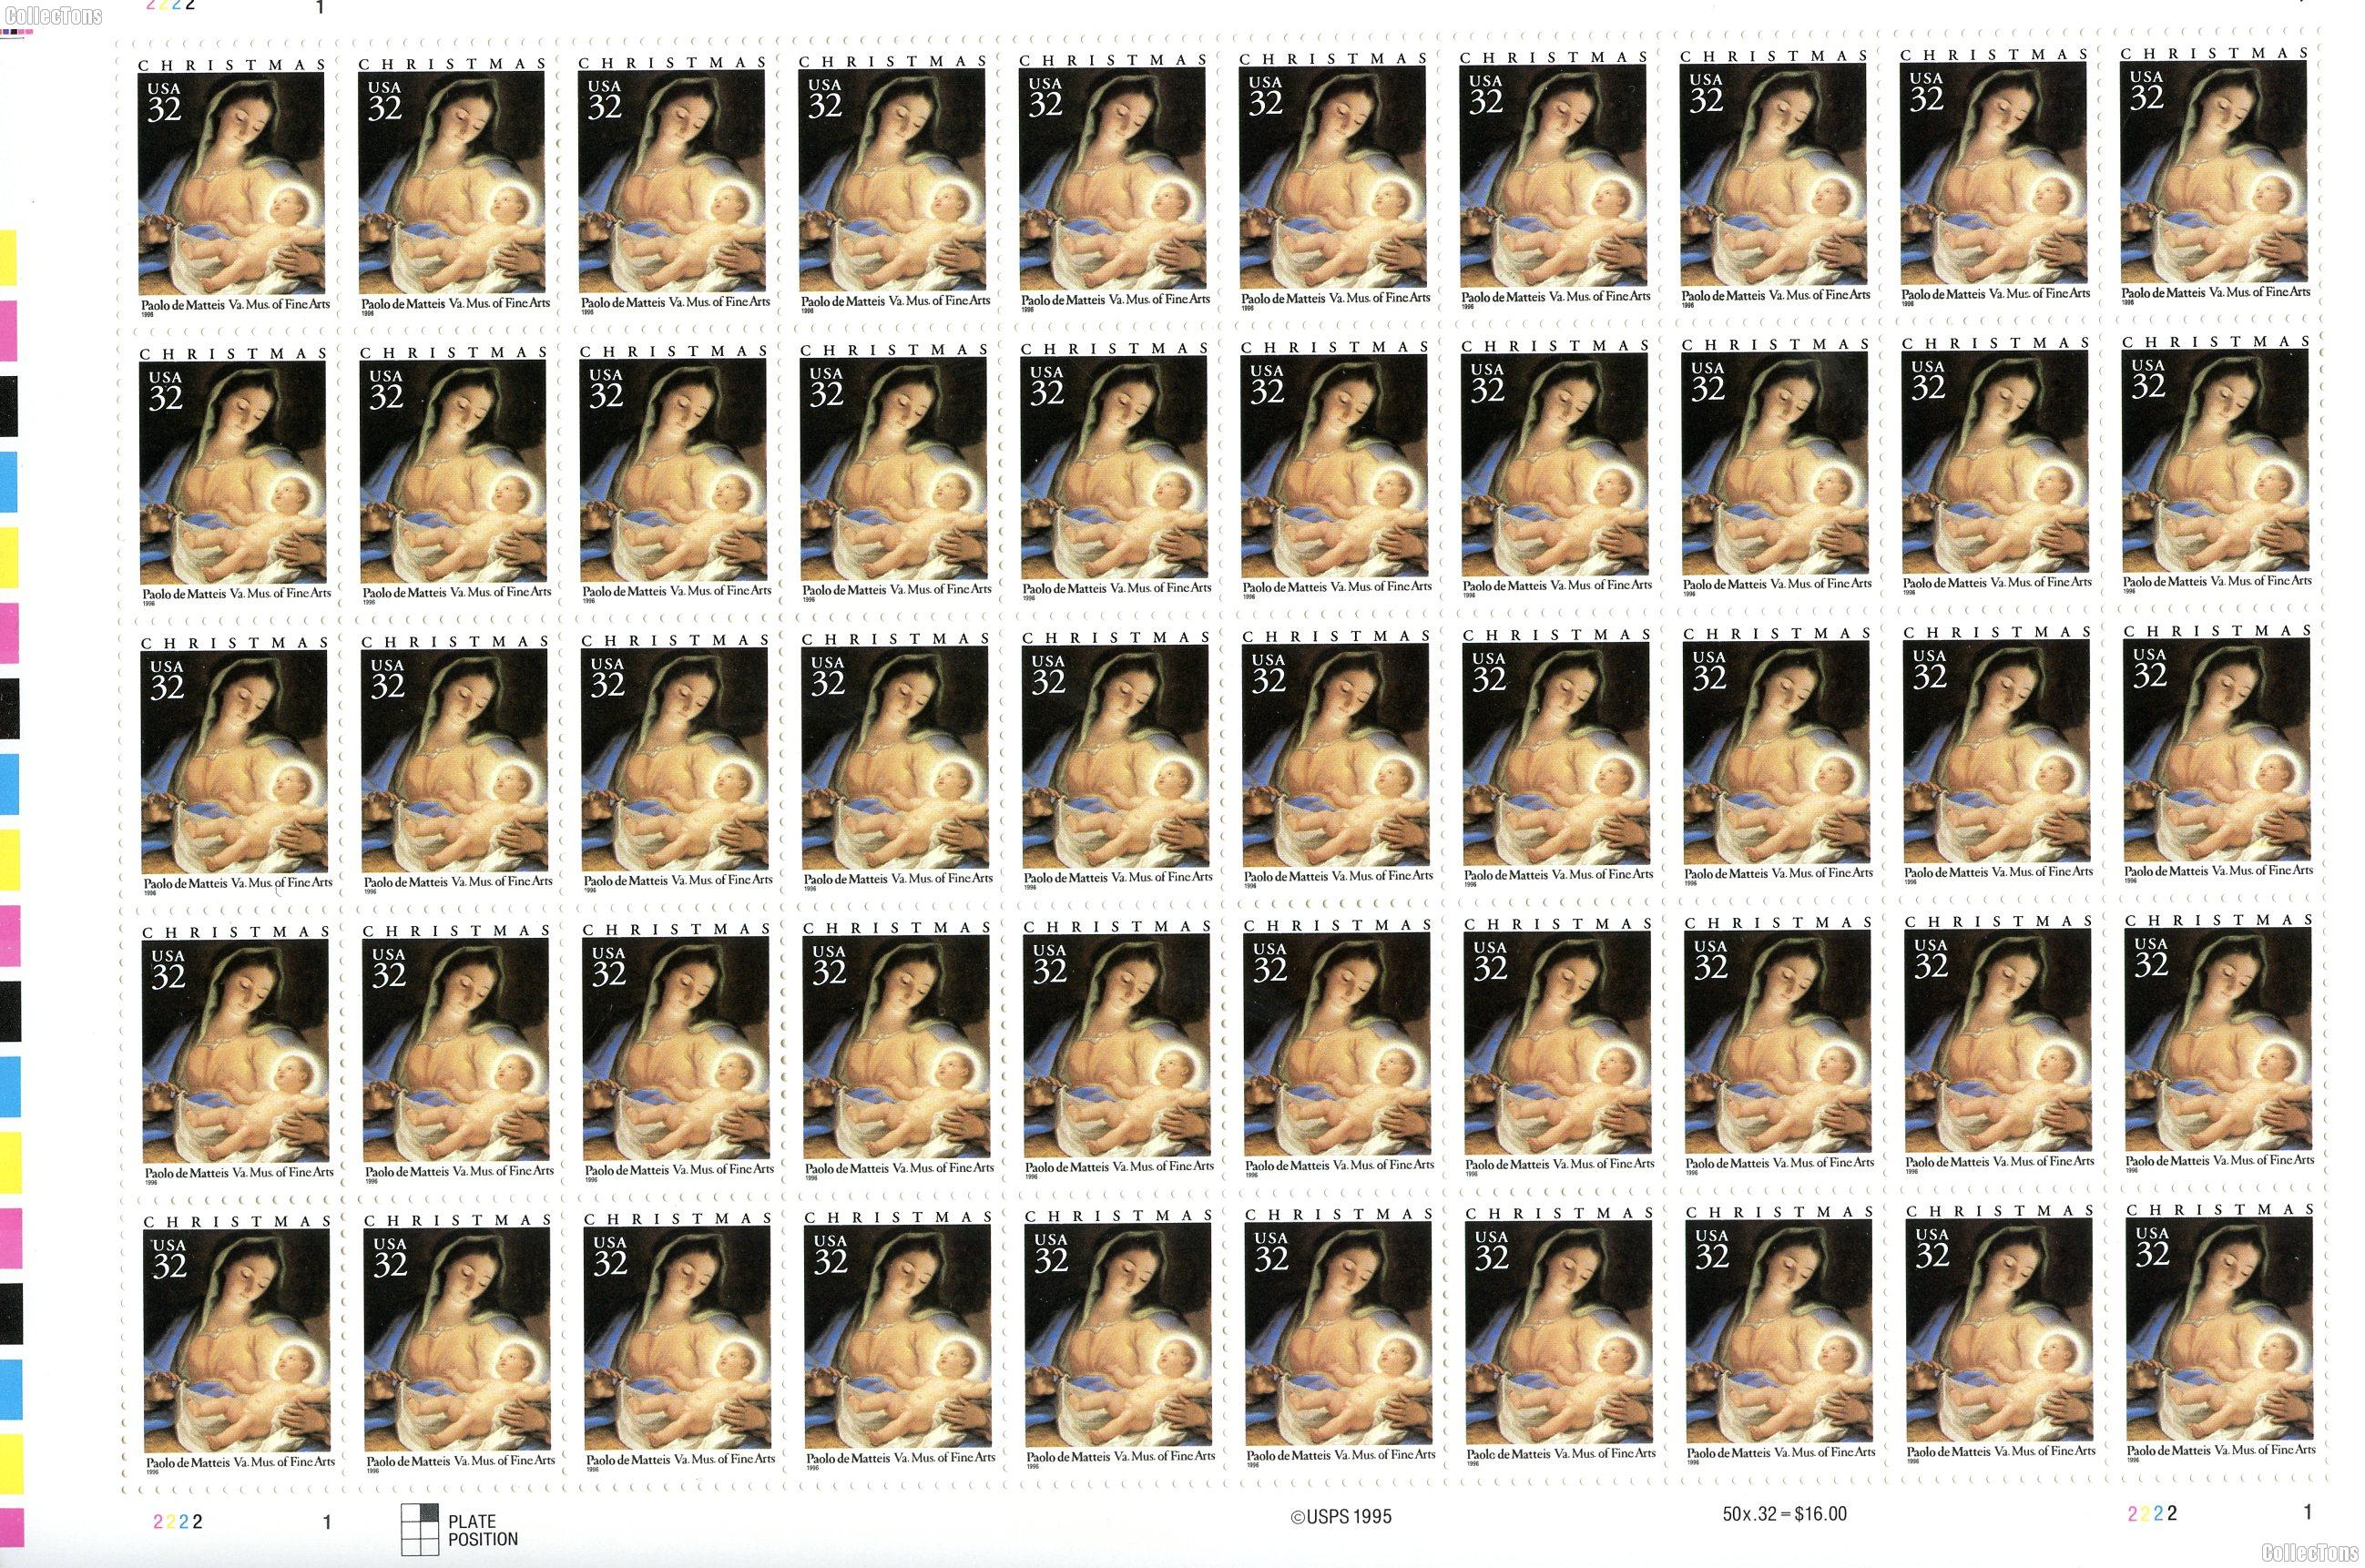 1996 Madonna & Child 32 Cent US Postage Stamp MNH Sheet of 50 Scott #3112